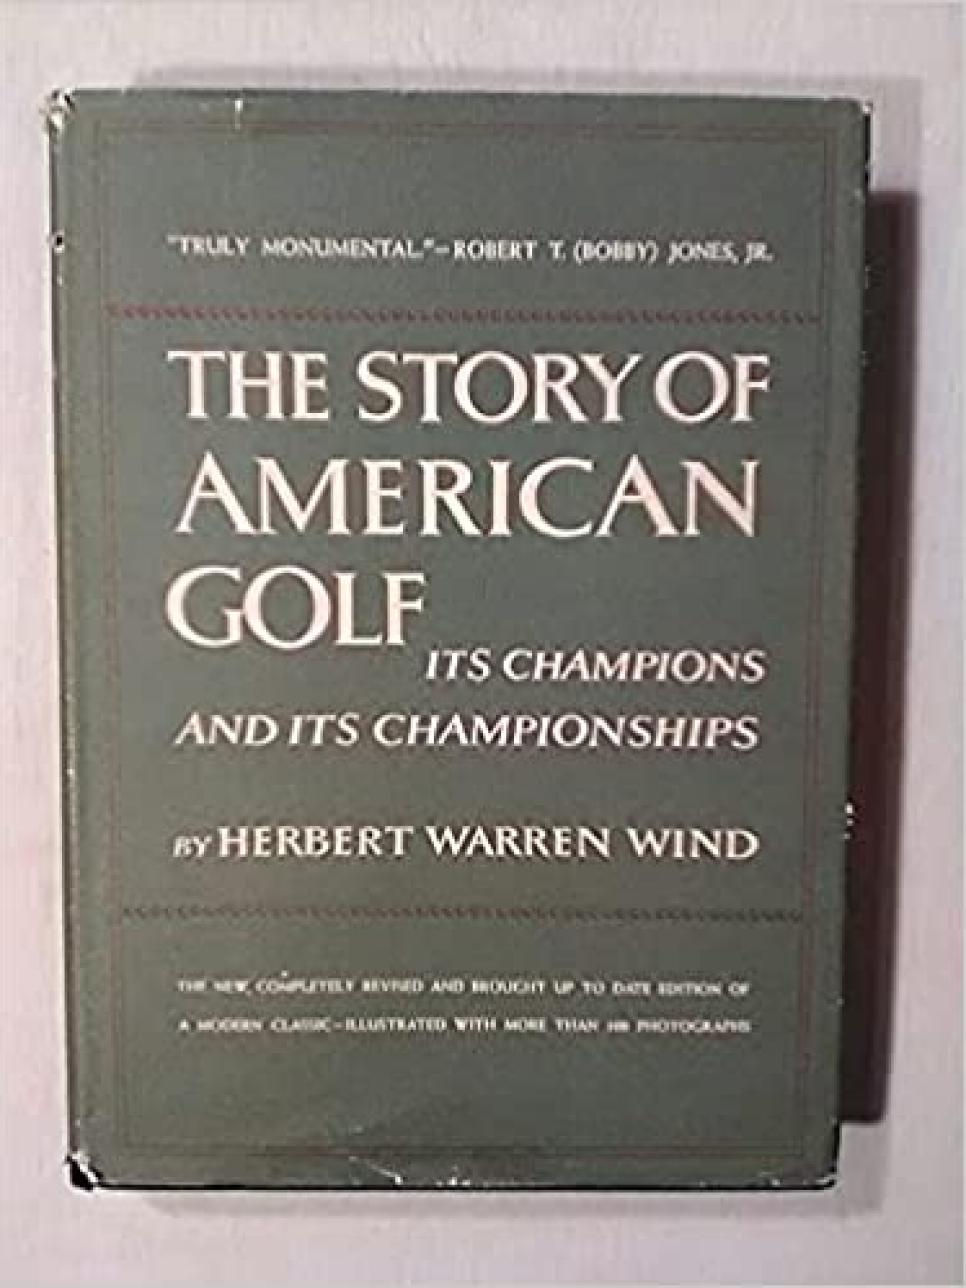 rx-amazonthe-story-of-american-golf-by-herbert-warren-wind-1948.jpeg